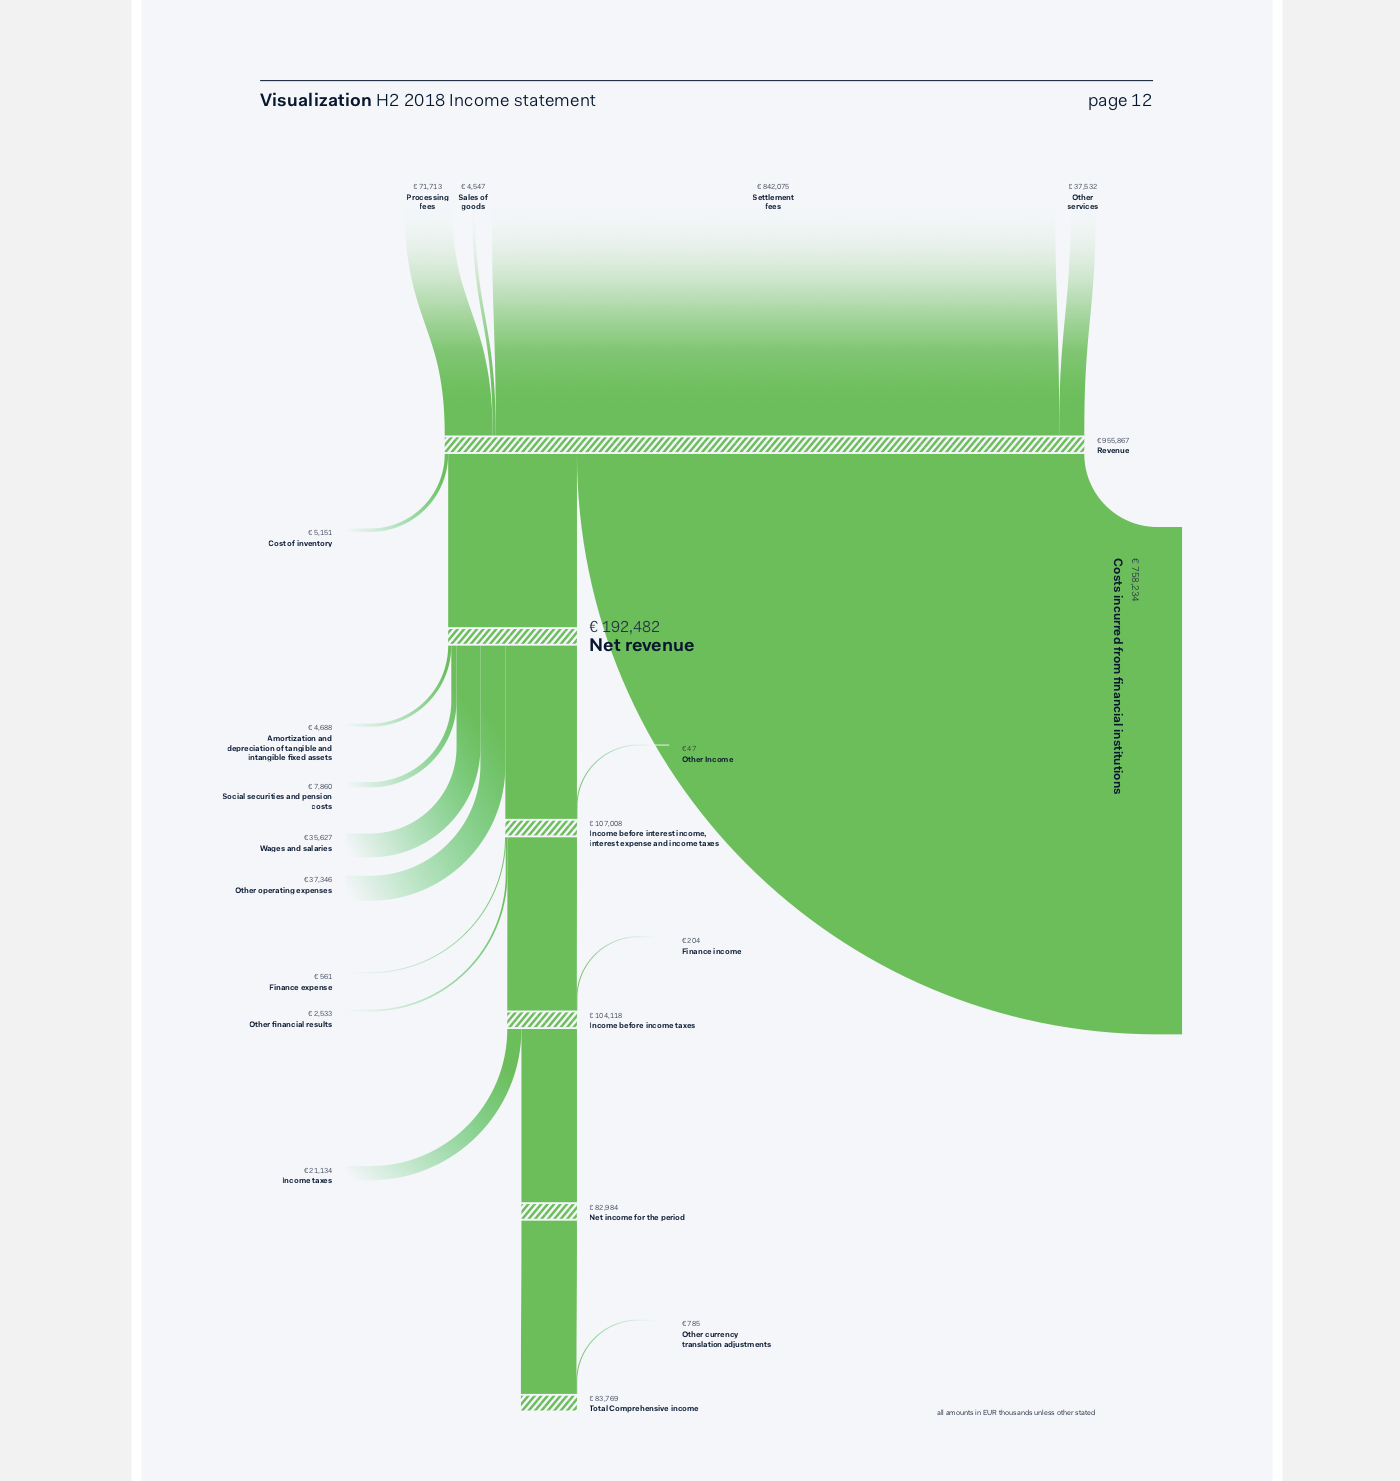 The Flow / Sankey diagram of Adyen's income statement